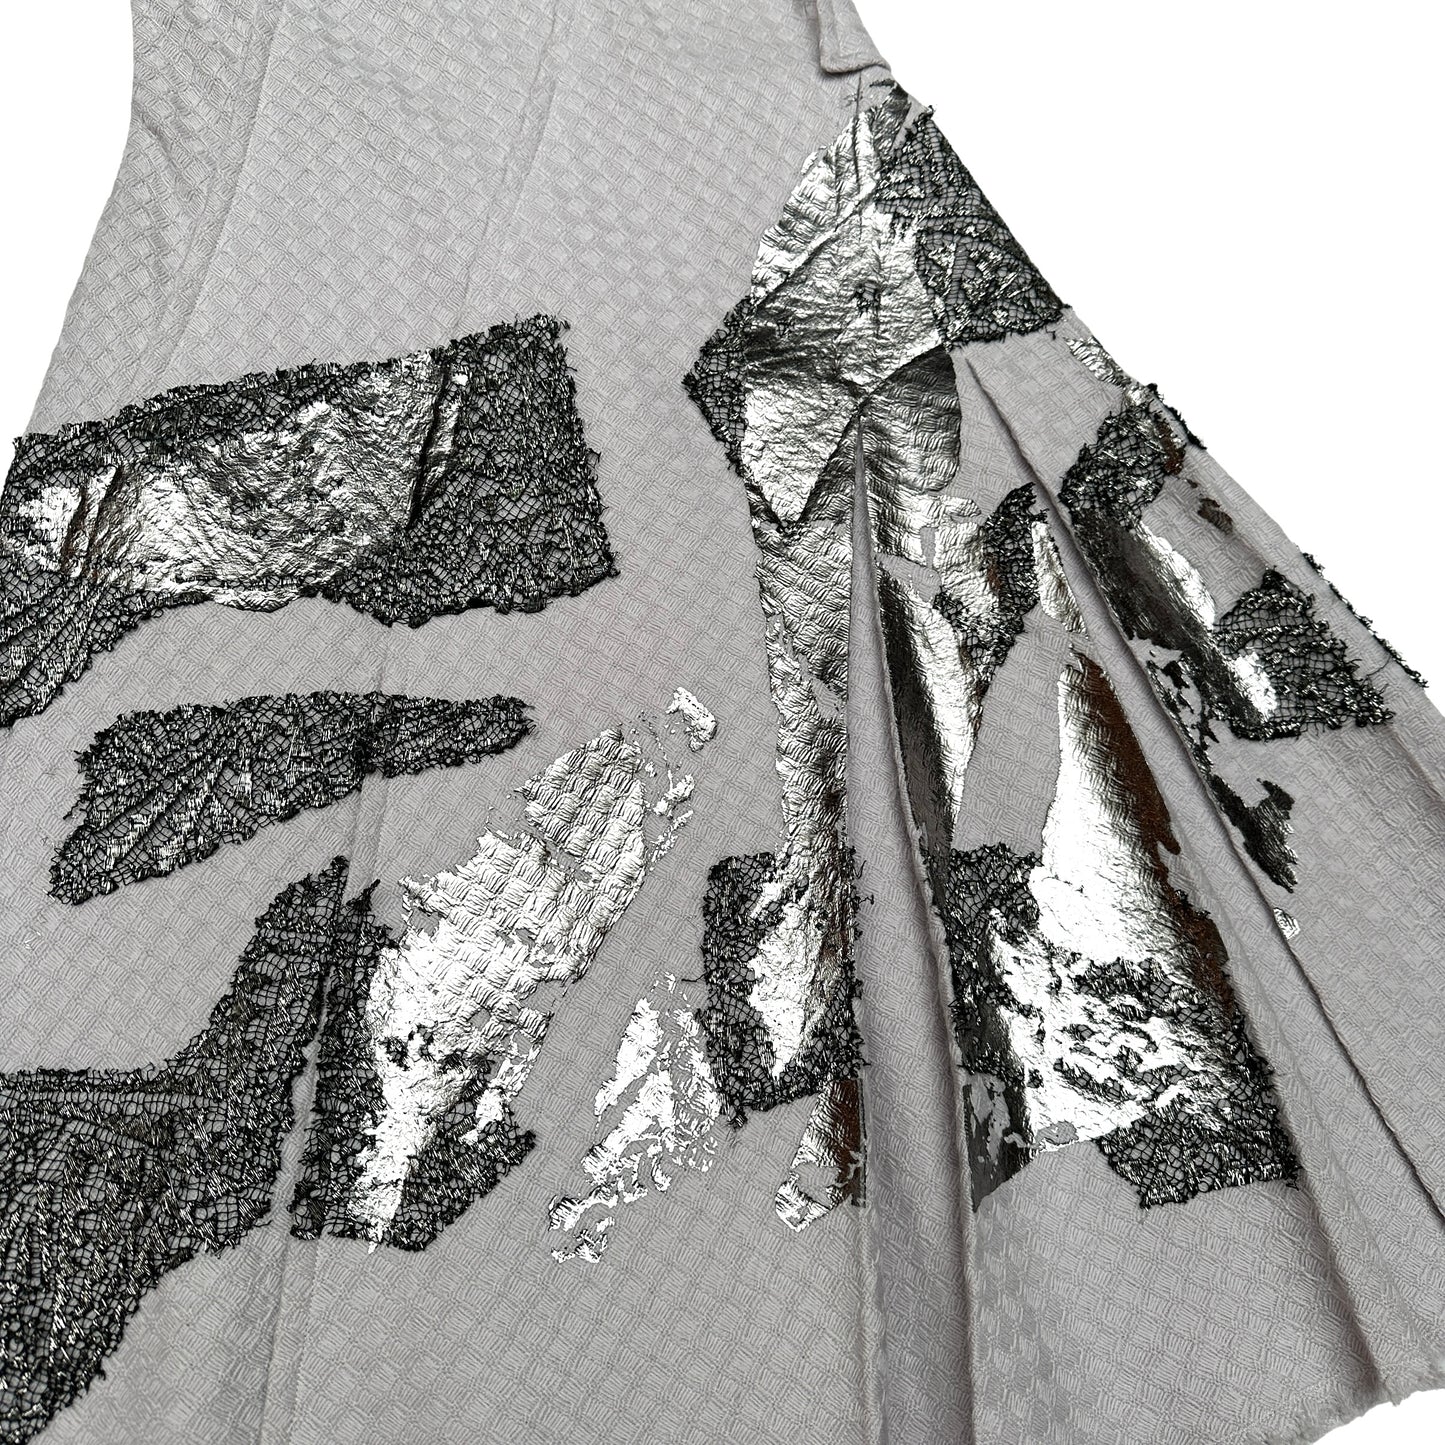 Grey Wool Dress w/Silver & Lace details - M